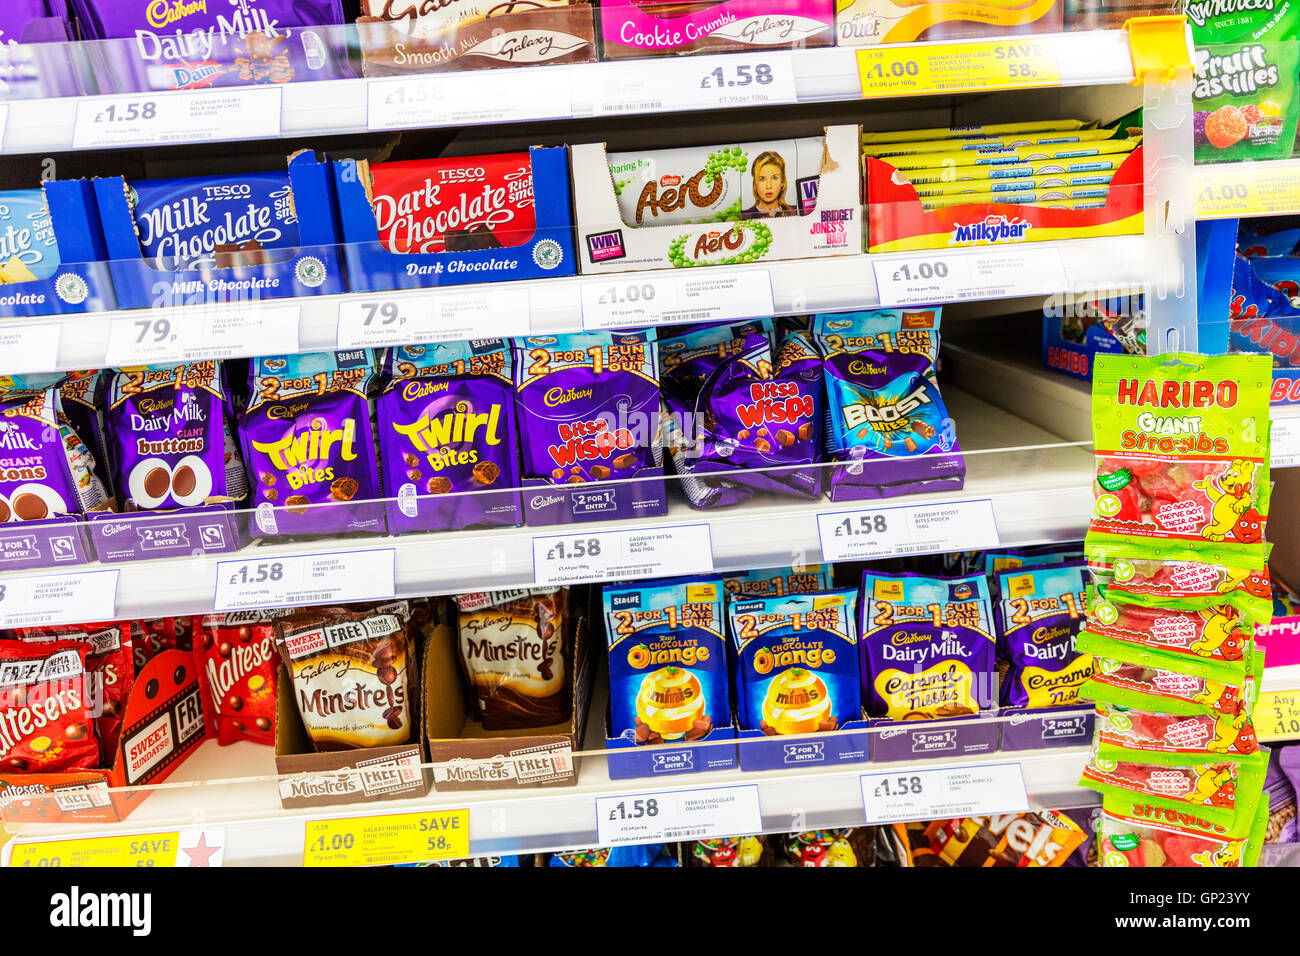 Chocolate bars products Cadbury galaxy twirl supermarket display stand supermarkets displays UK England GB Stock Photo